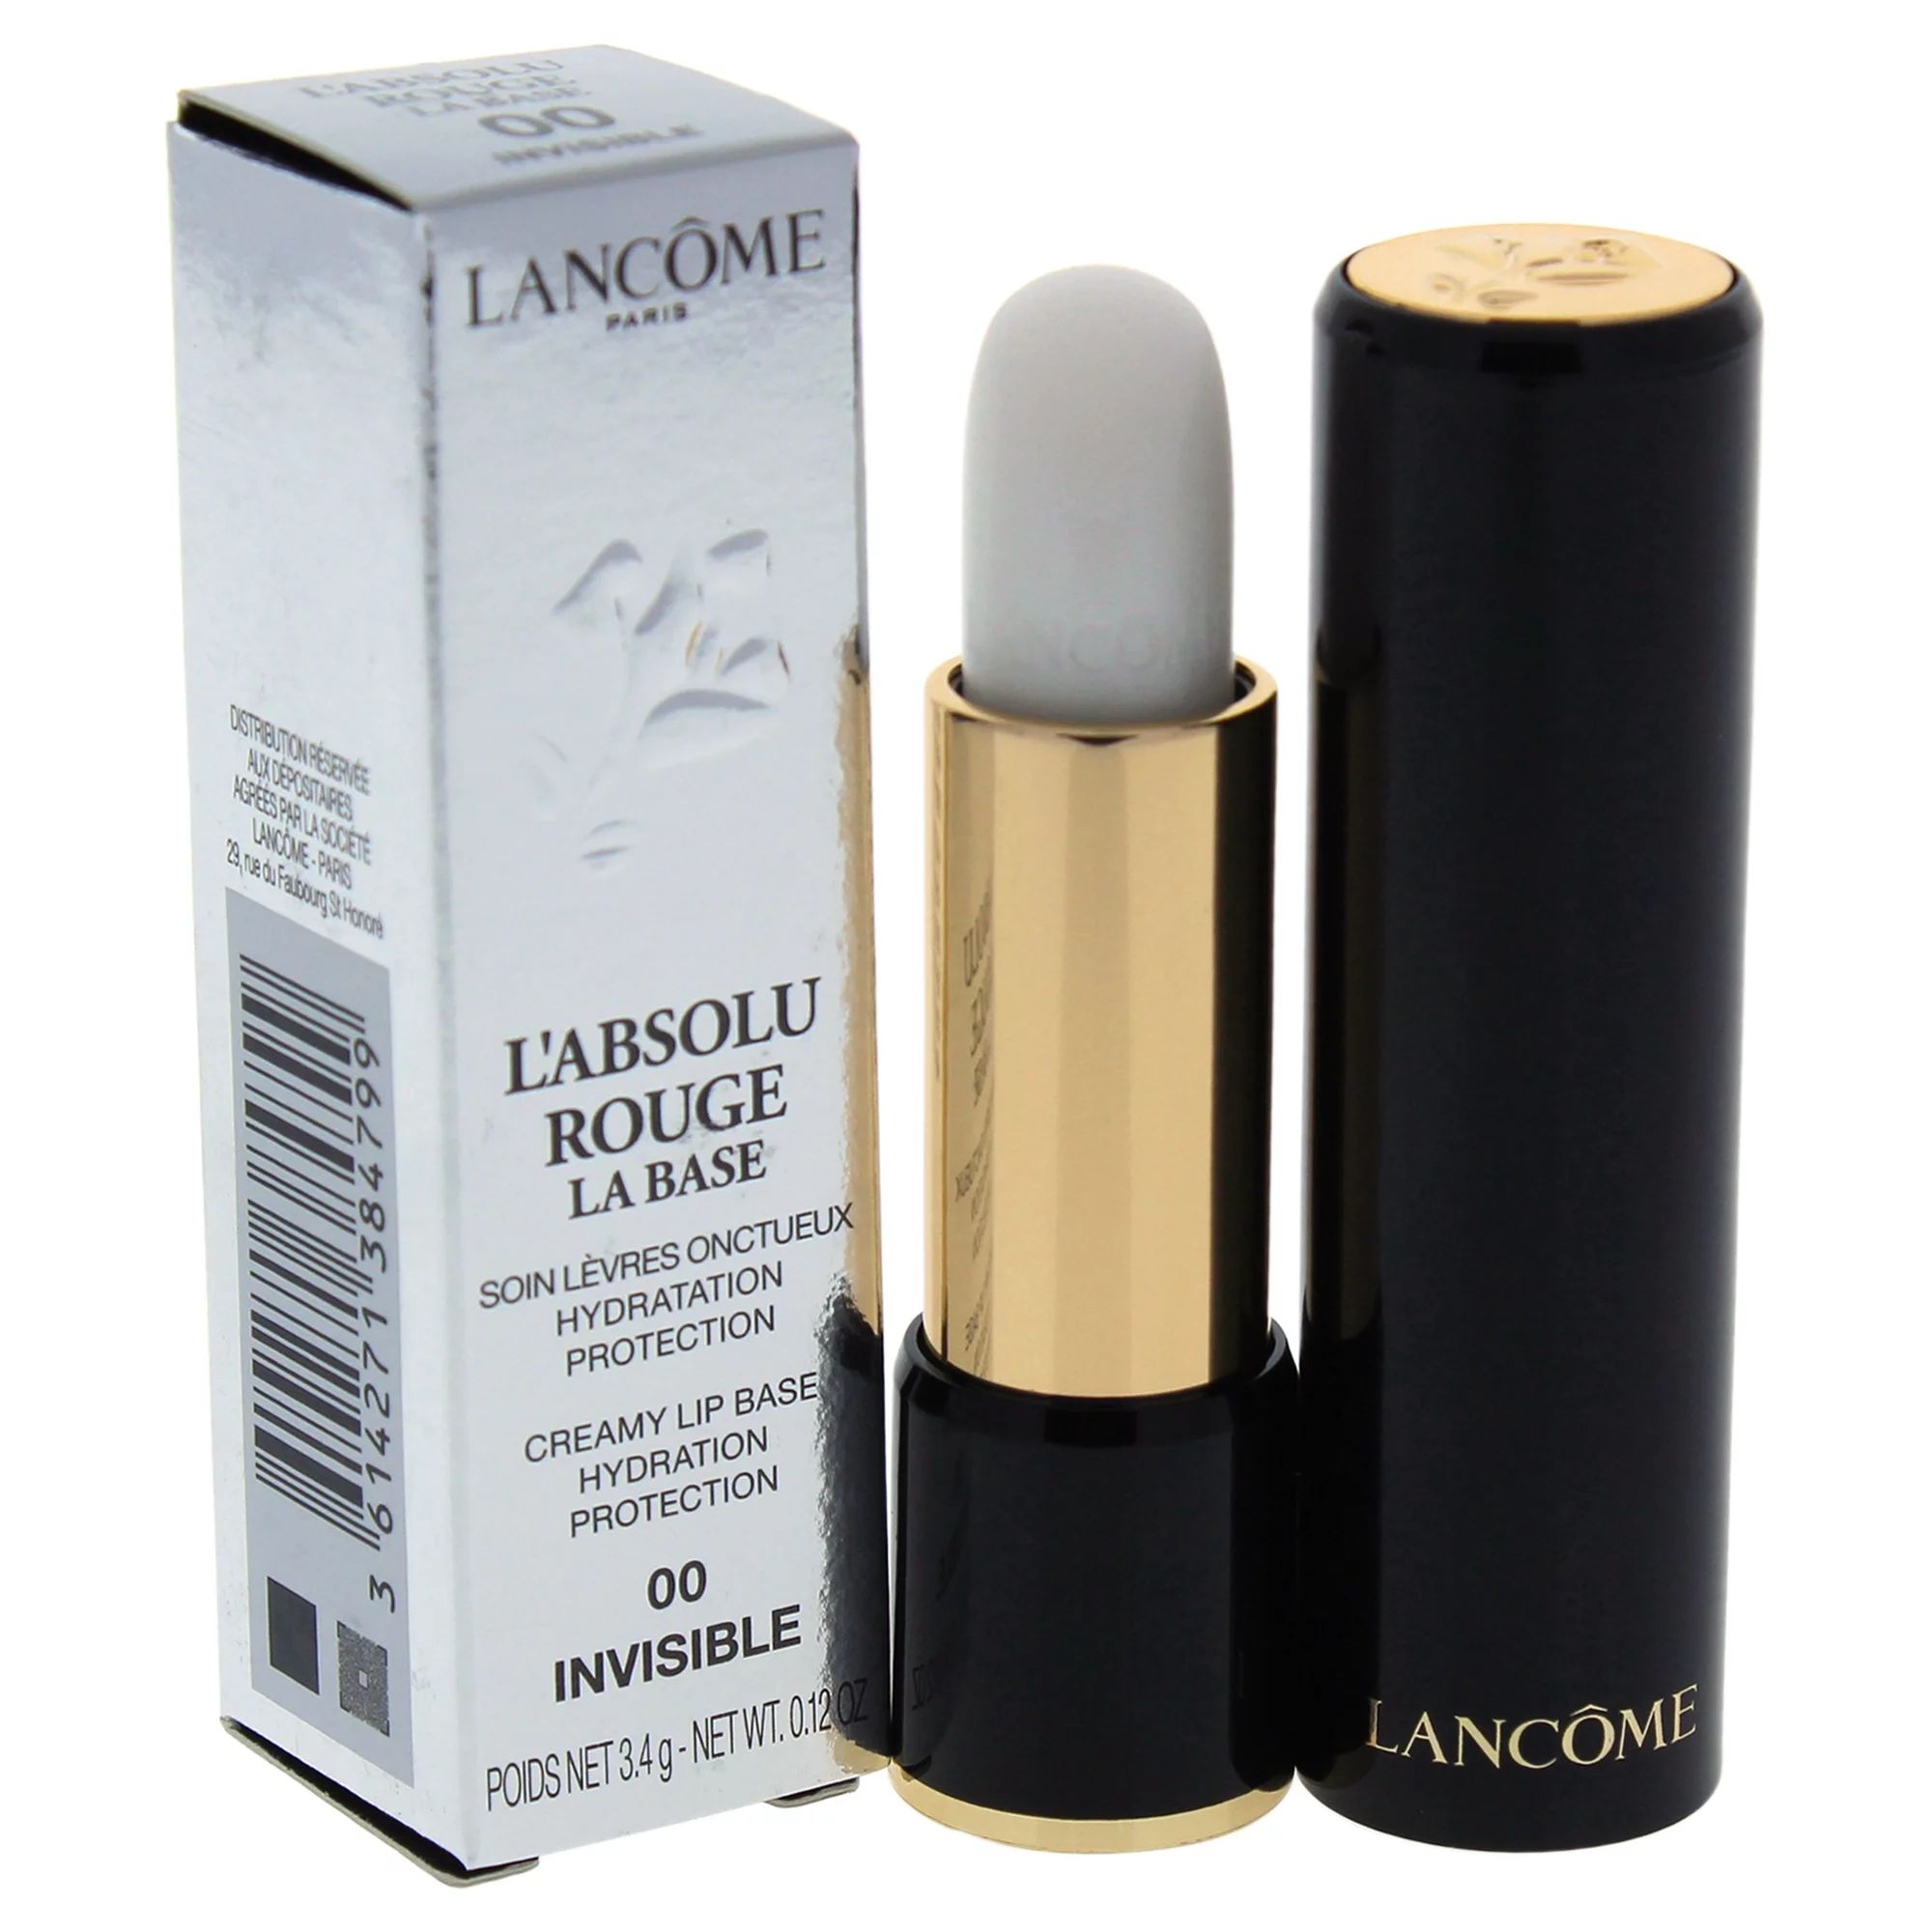 Lancome L'Absolu Rouge La Base Creamy Lip Base Hydration Protection 00 invsible, 0.12 oz | Walmart (US)